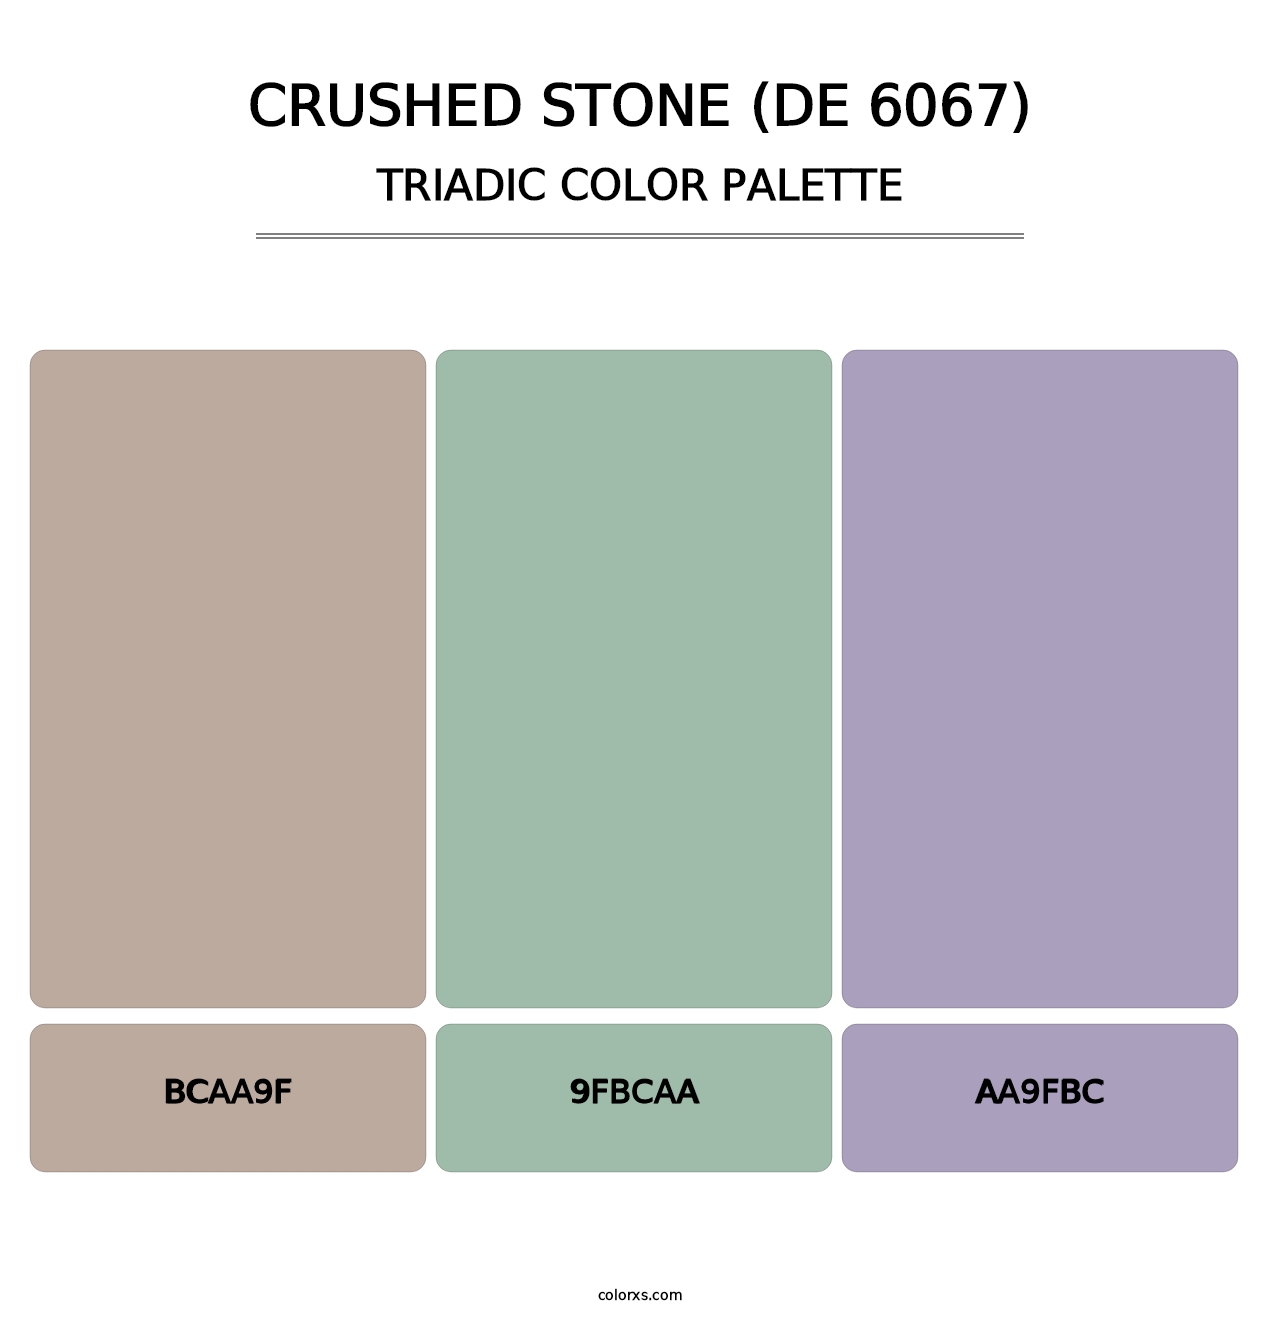 Crushed Stone (DE 6067) - Triadic Color Palette